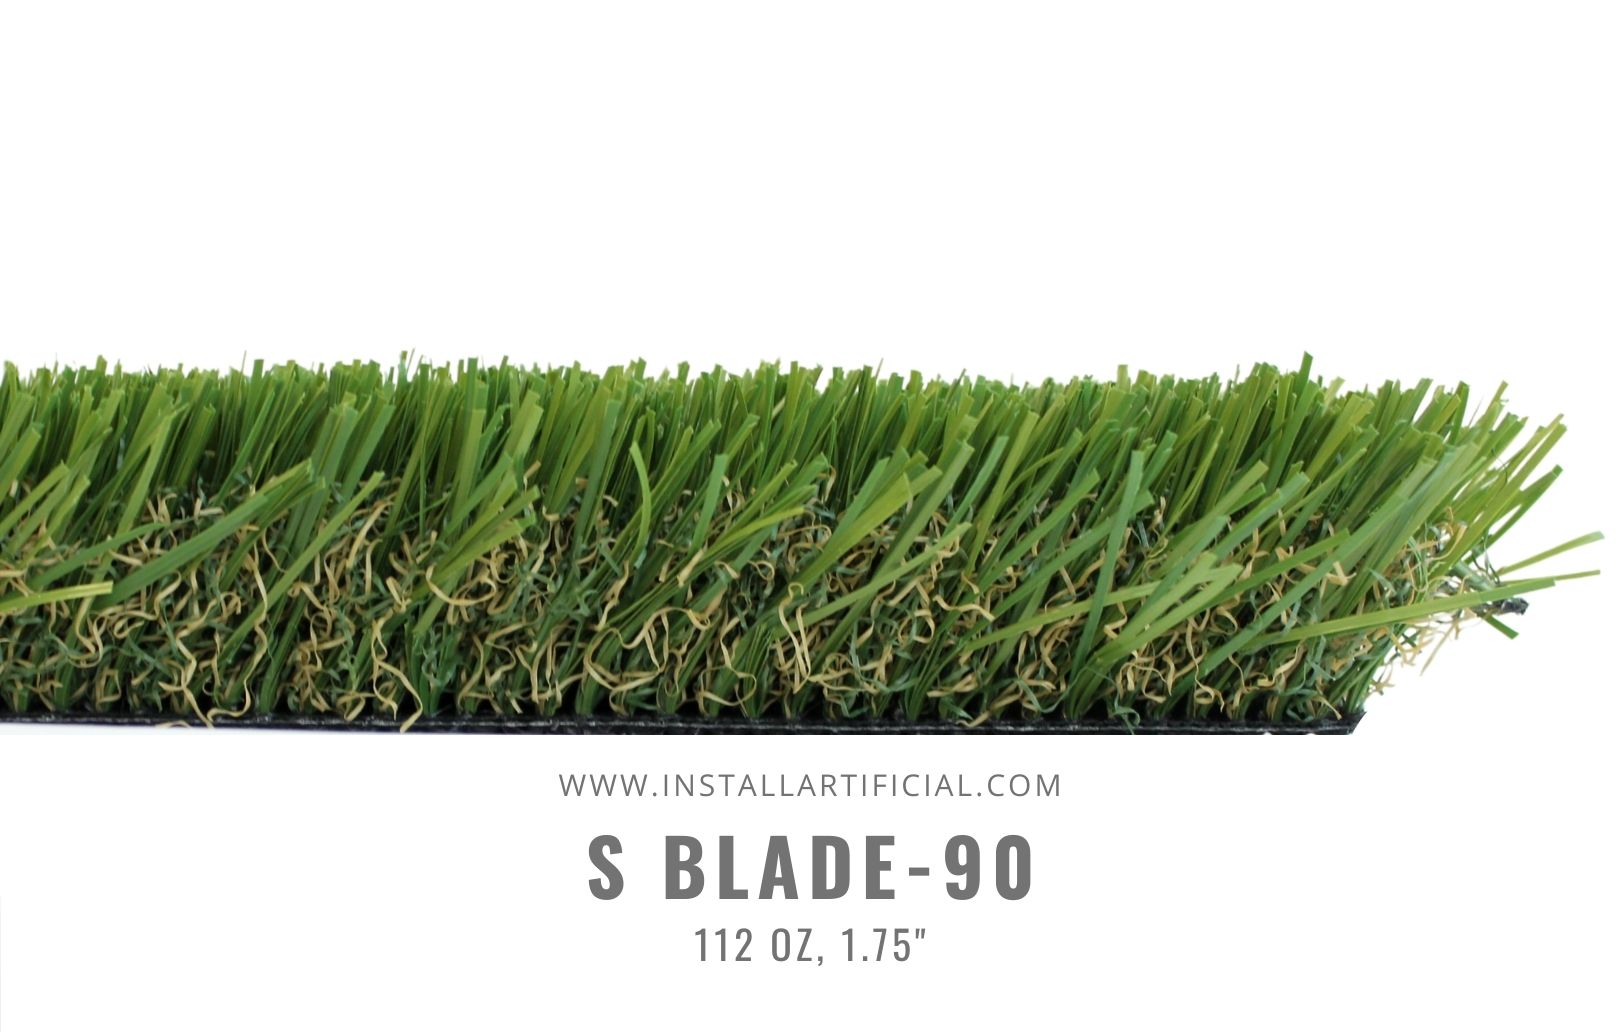 S blade-90, Global Syn Turf, side